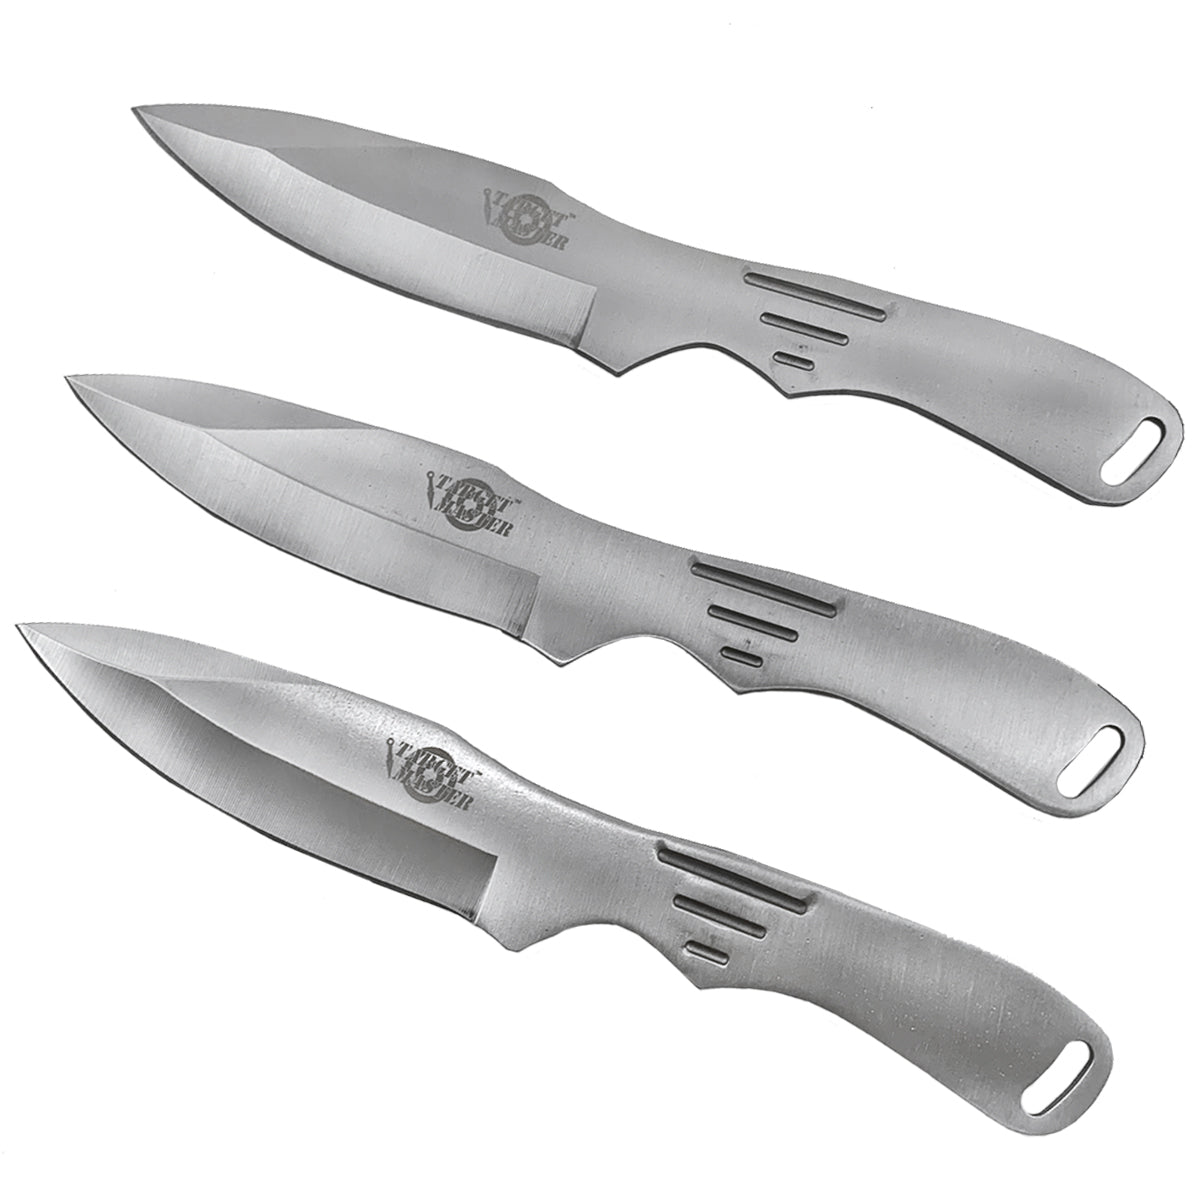 target-master-3-pcs-silver-throwing-knife-set-8-overall-length-w-nylon-sheath